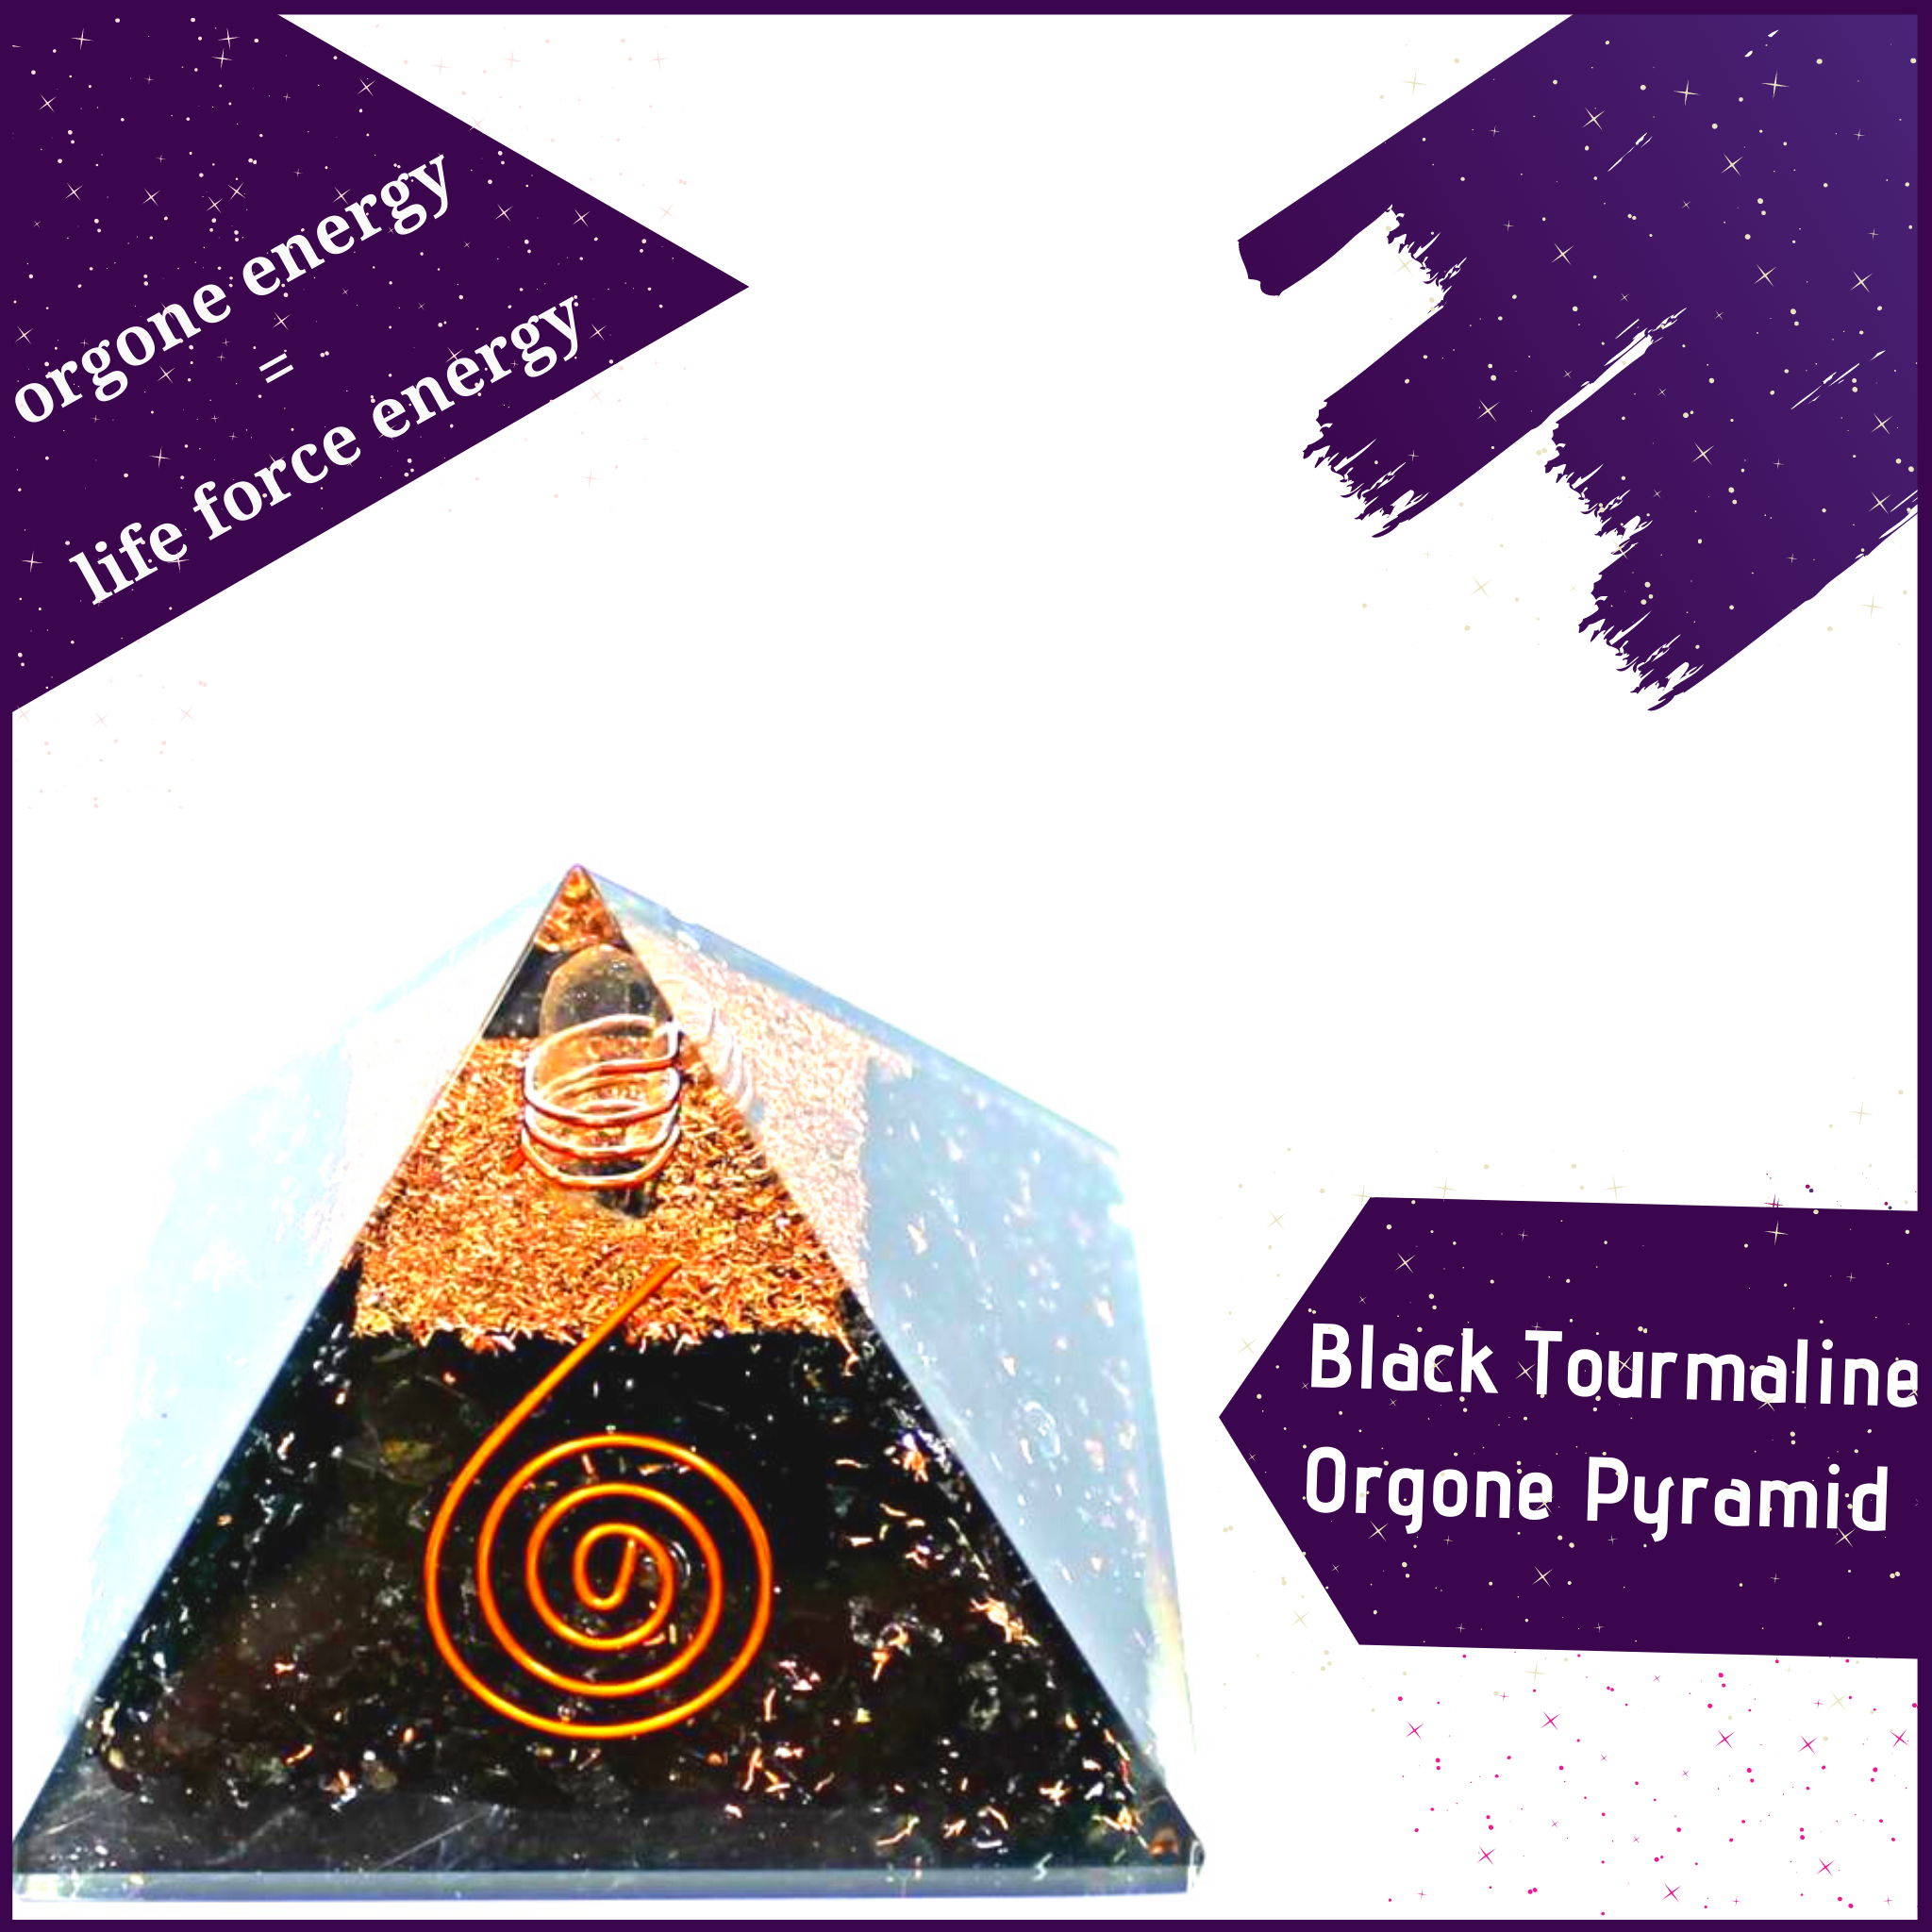 Black Tourmaline Orgone Pyramid - 51pyramids